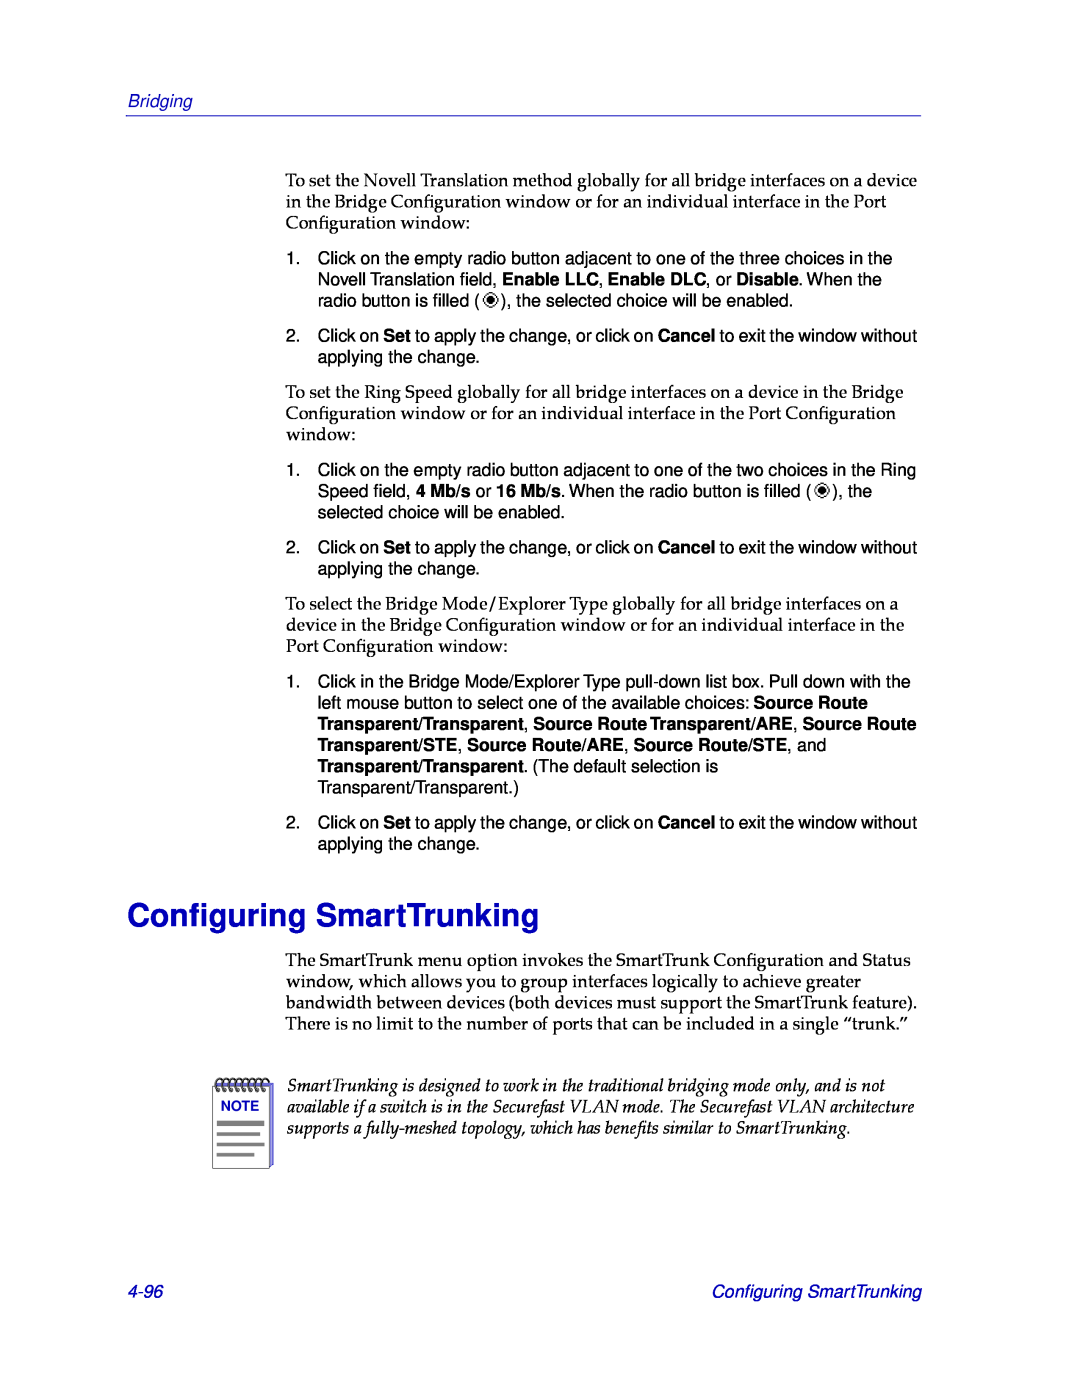 Cabletron Systems CSX400, CSX200 manual Conﬁguring SmartTrunking, 4-96, Bridging 